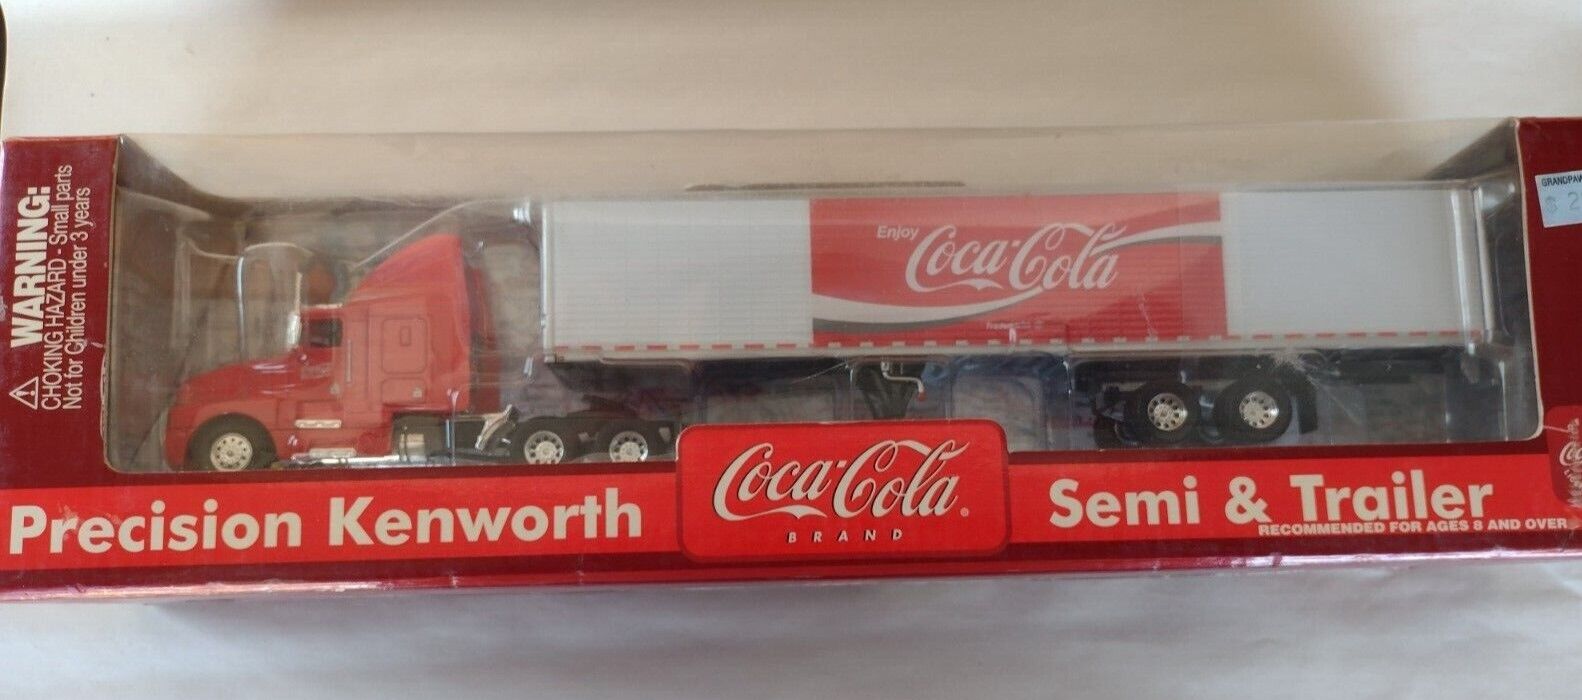 Gearbox Precision Kenworth Coca-Cola Semi & Trailer Die Cast Metal